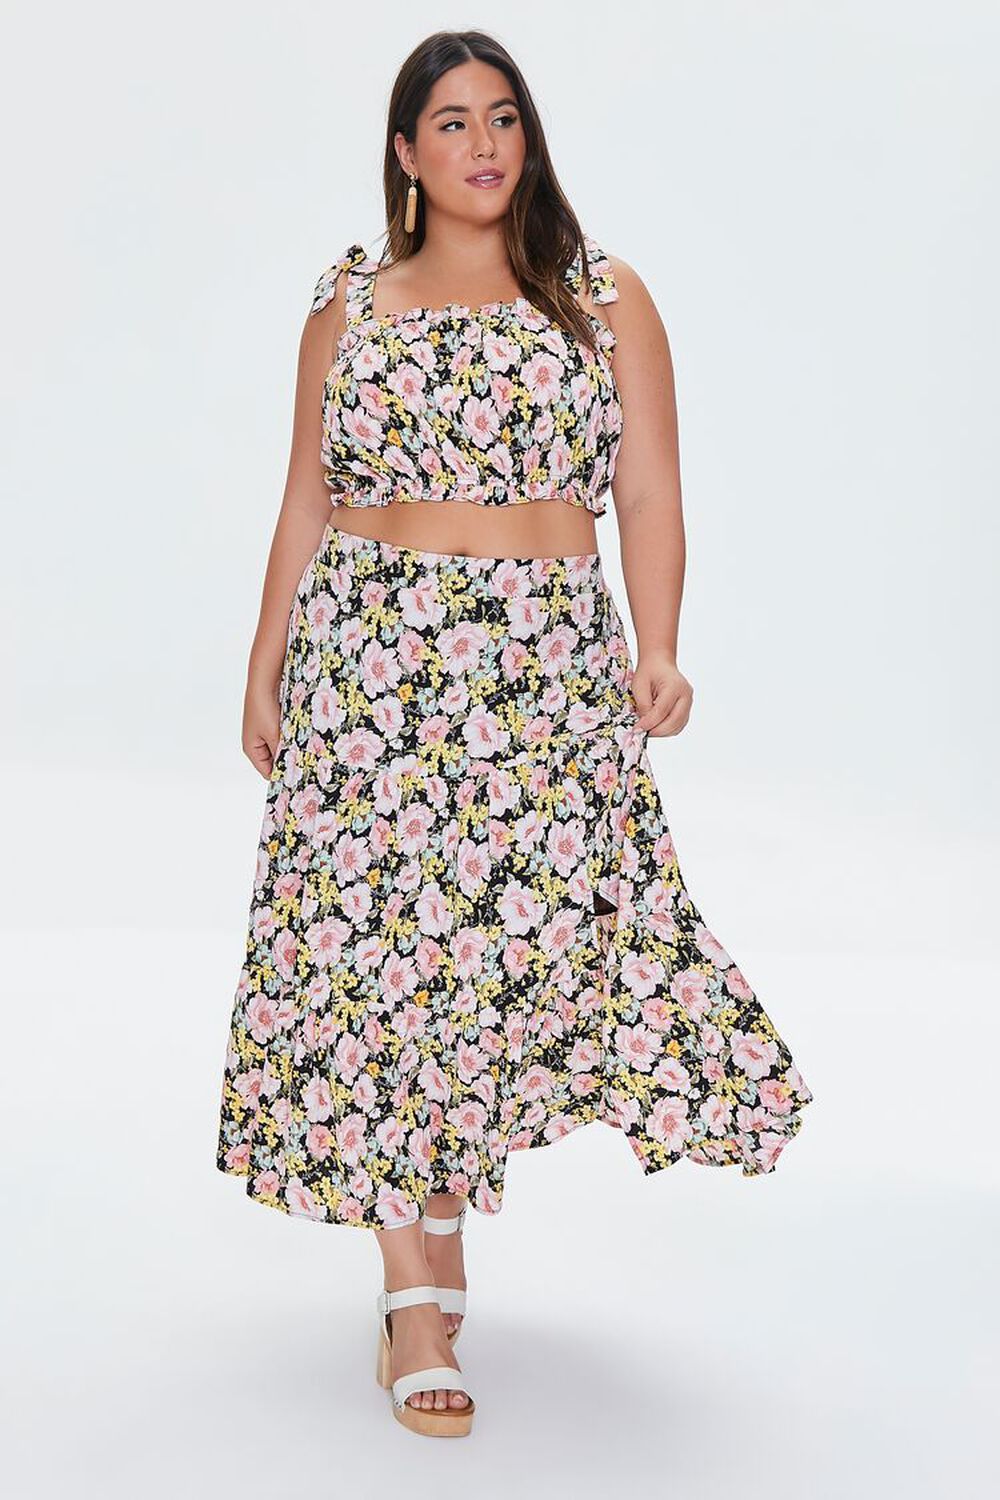 BLACK/MULTI Plus Size Floral Print Crop Top & Skirt Set, image 1